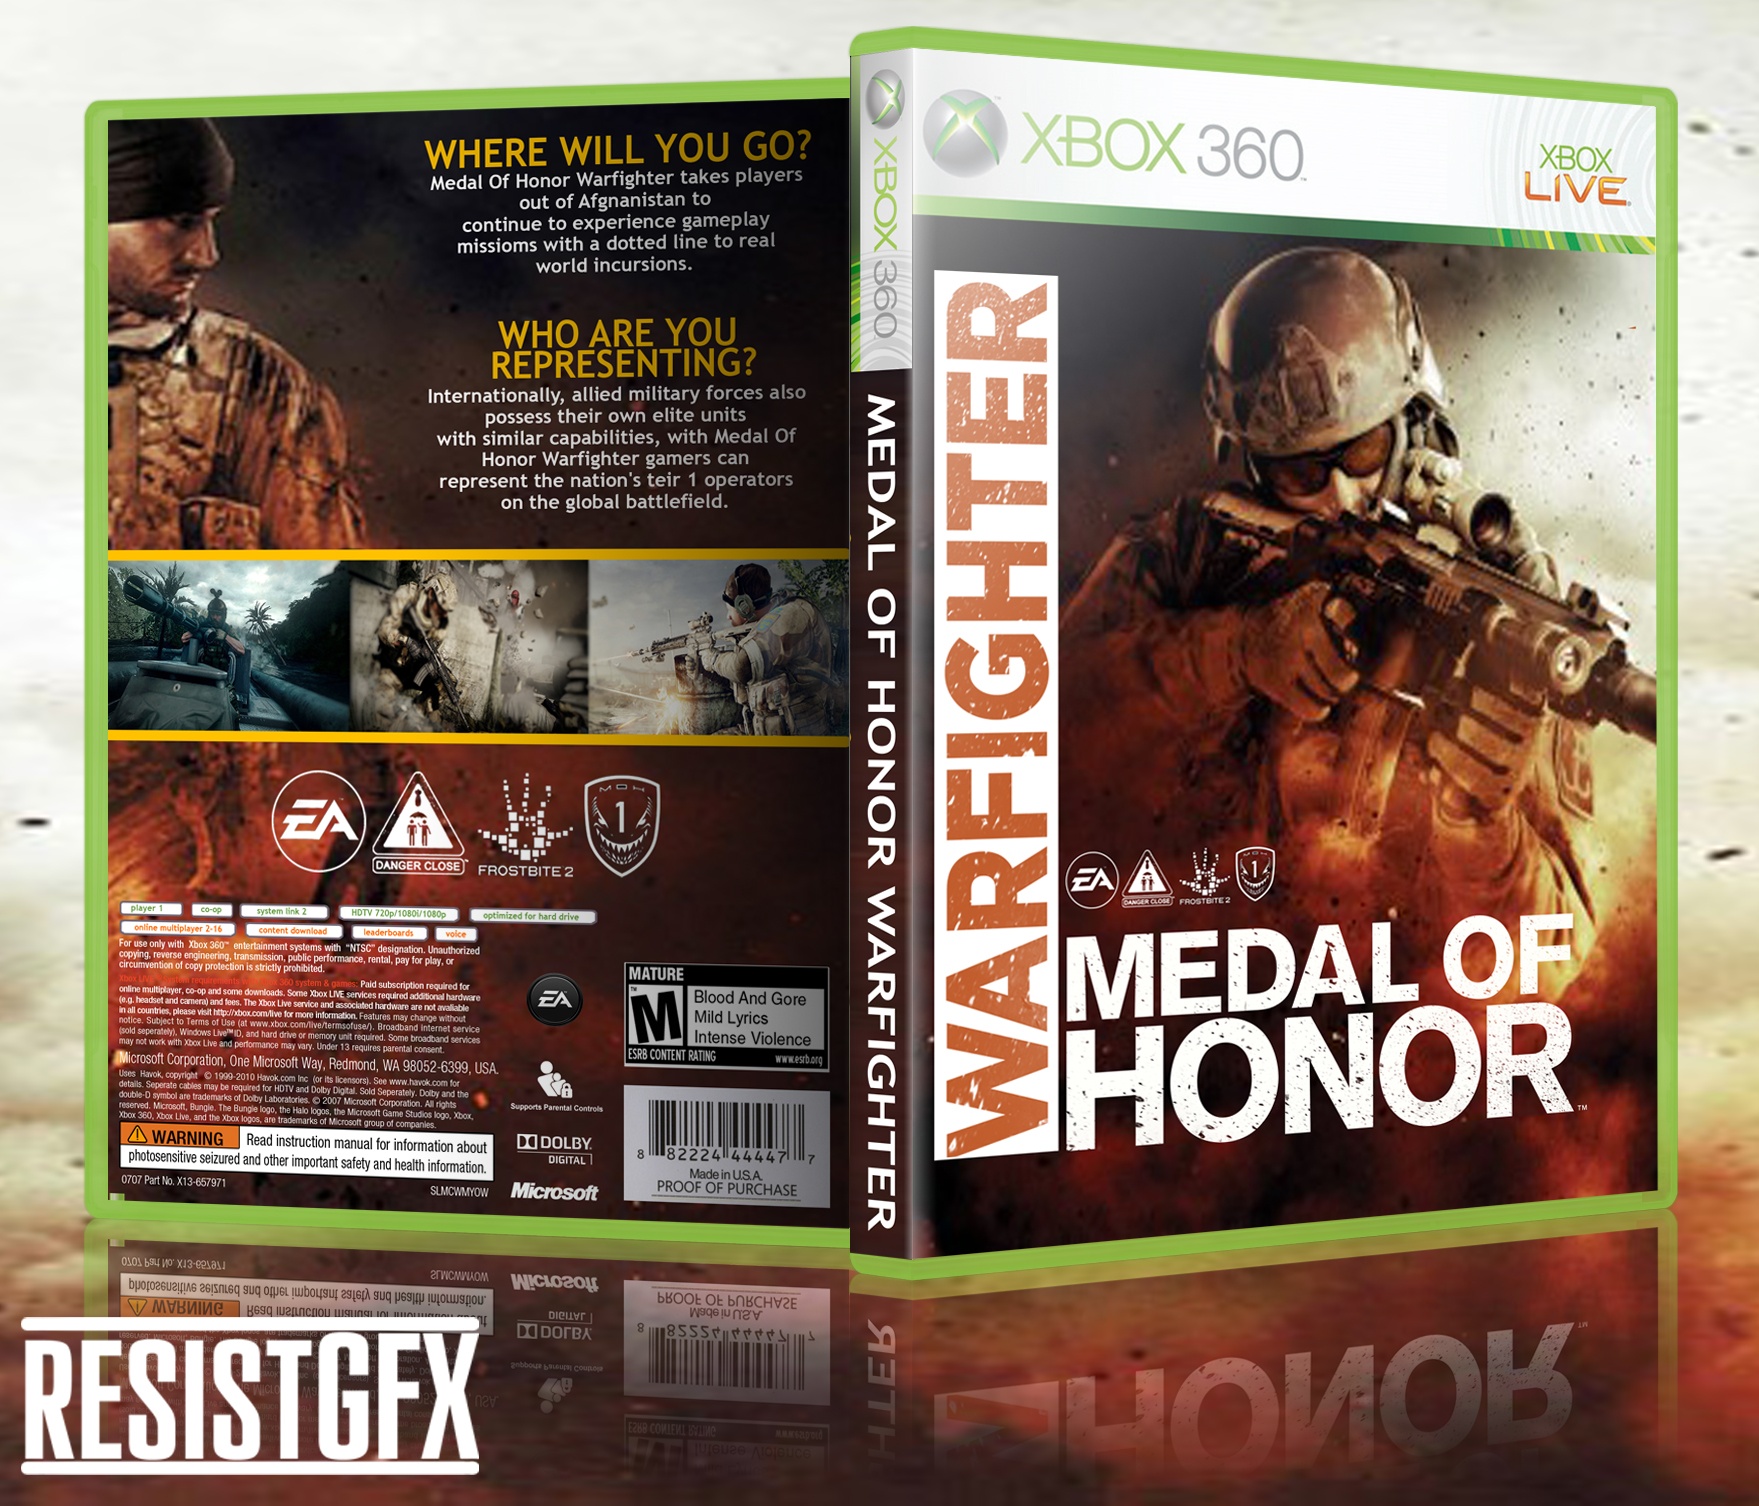 Medal of Honor Xbox 360 обложка. Medal of Honor: Warfighter Xbox 360 обложка. Medal of Honor Xbox 360 обложка для дисков. Медаль за отвагу на хбокс 360. Medal of honor трейнер